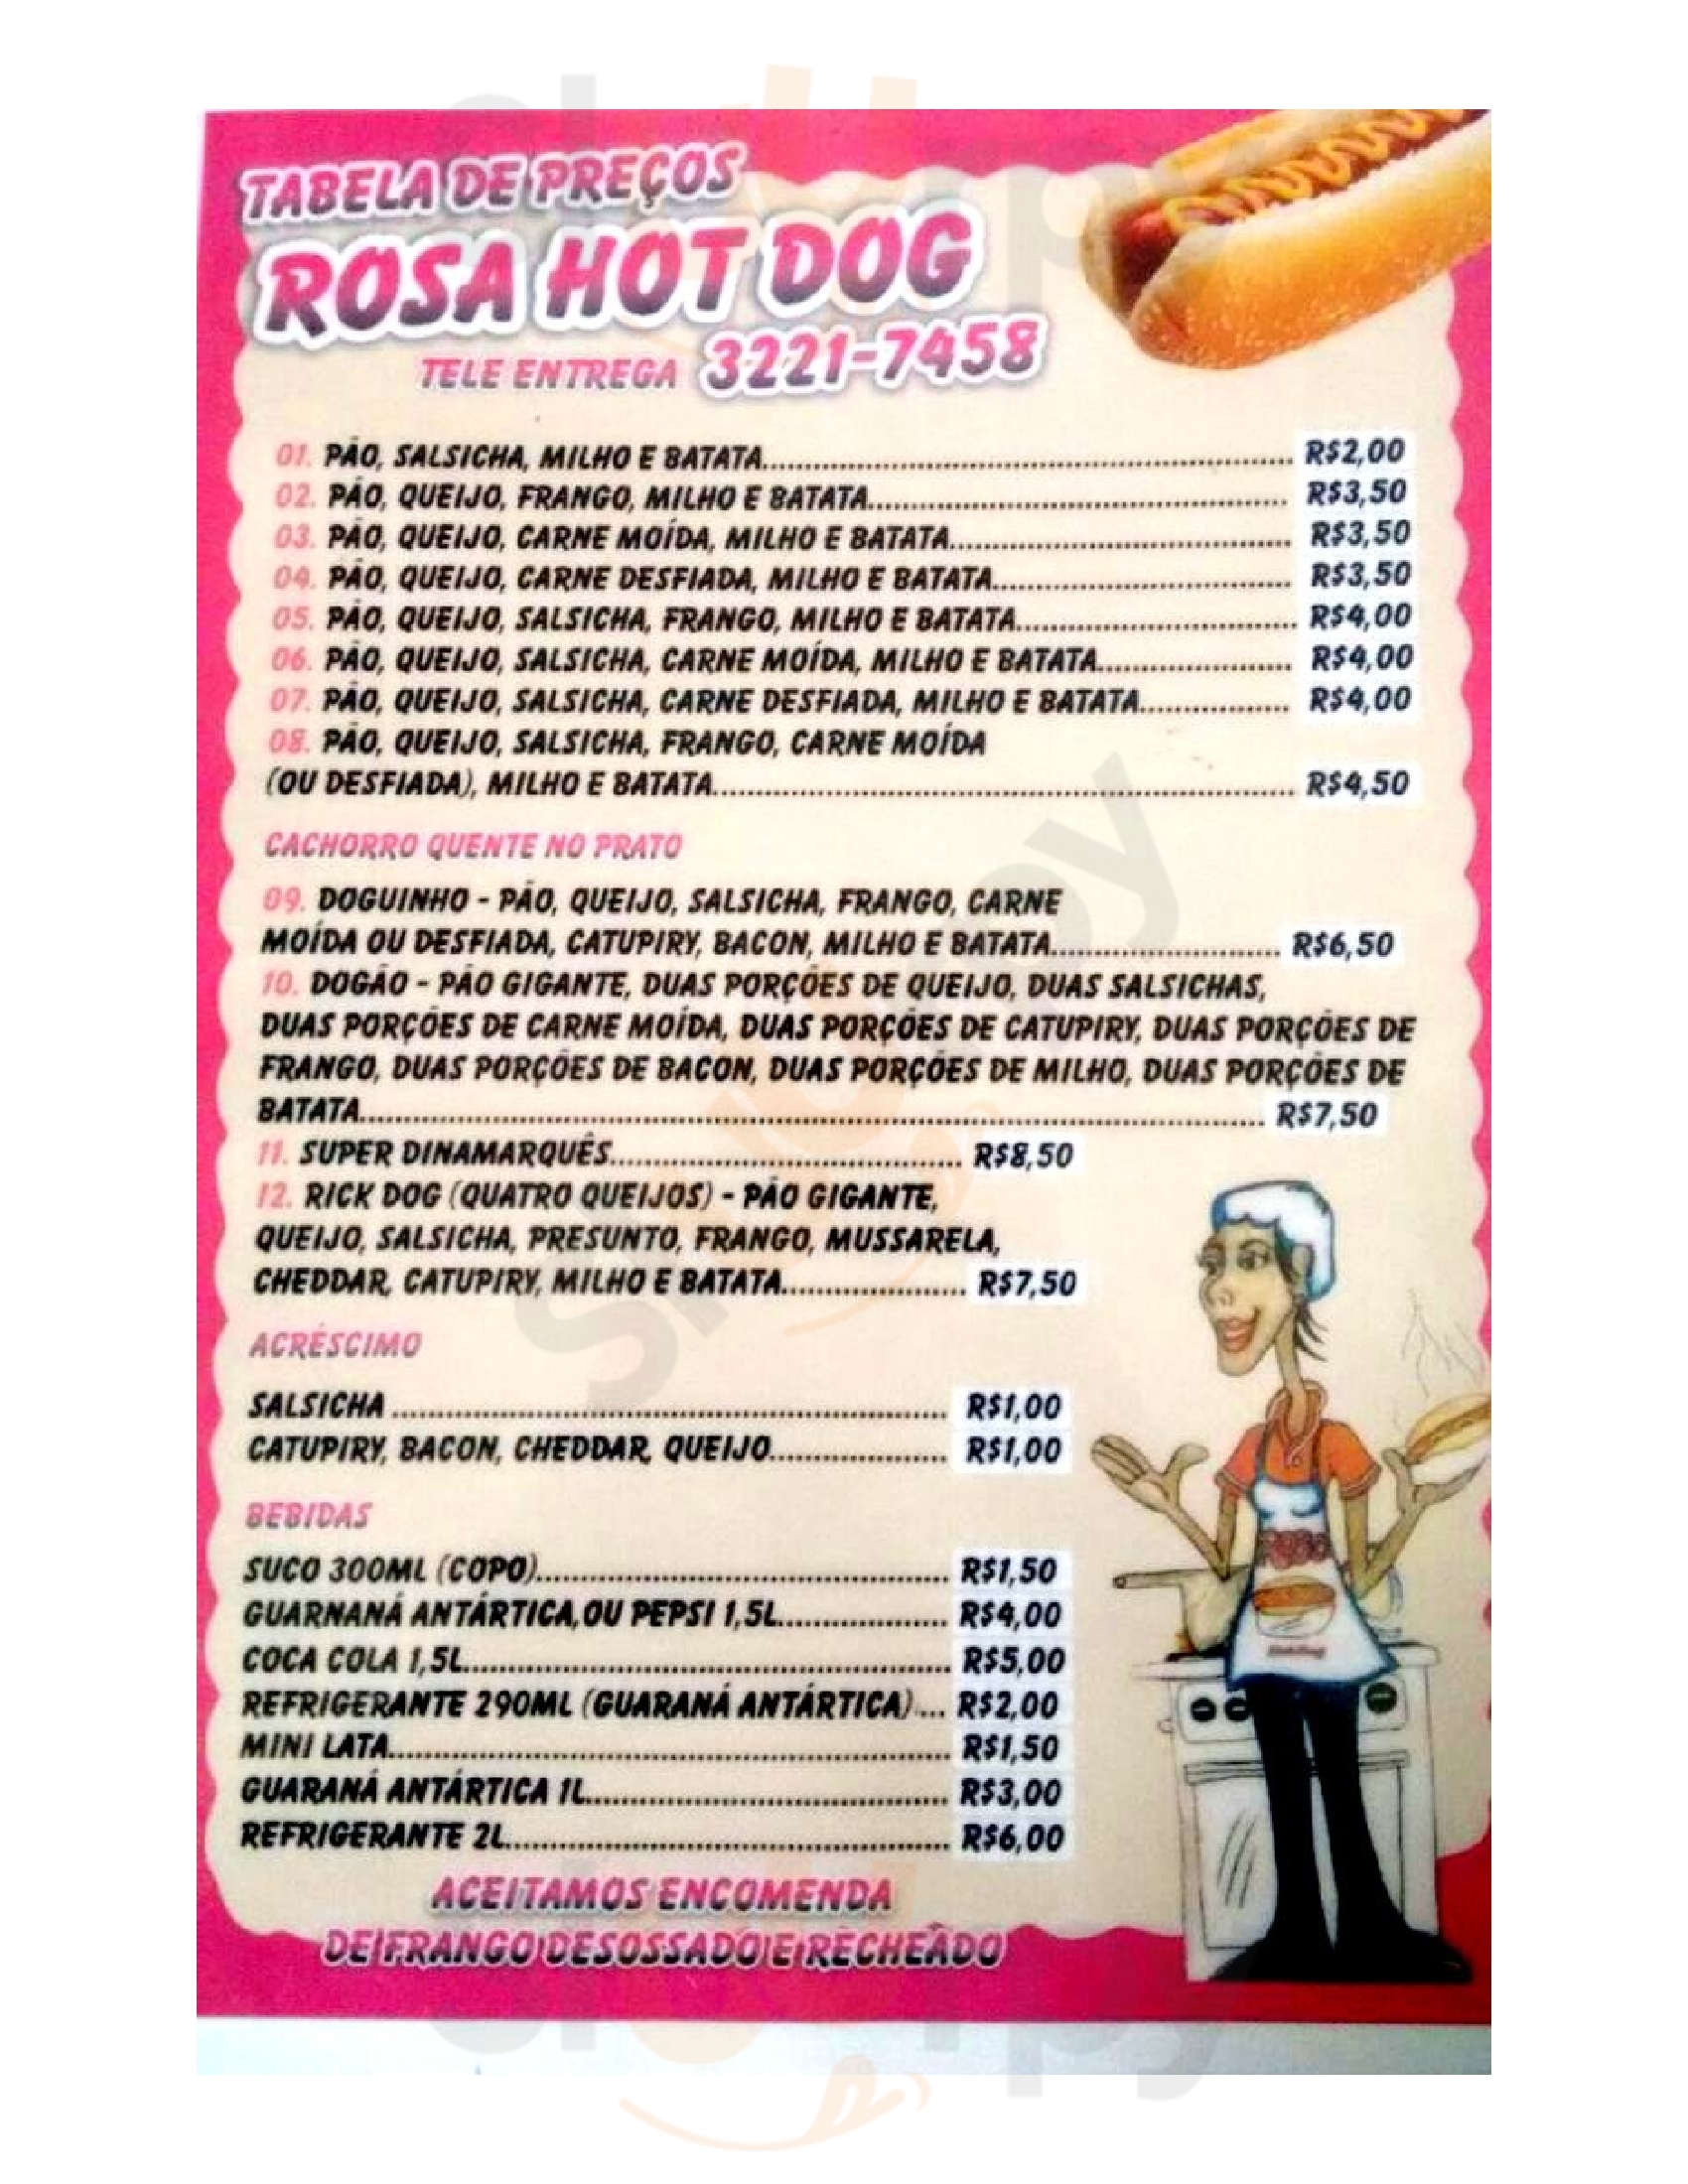 Rosa Hot Dog Montes Claros Menu - 1